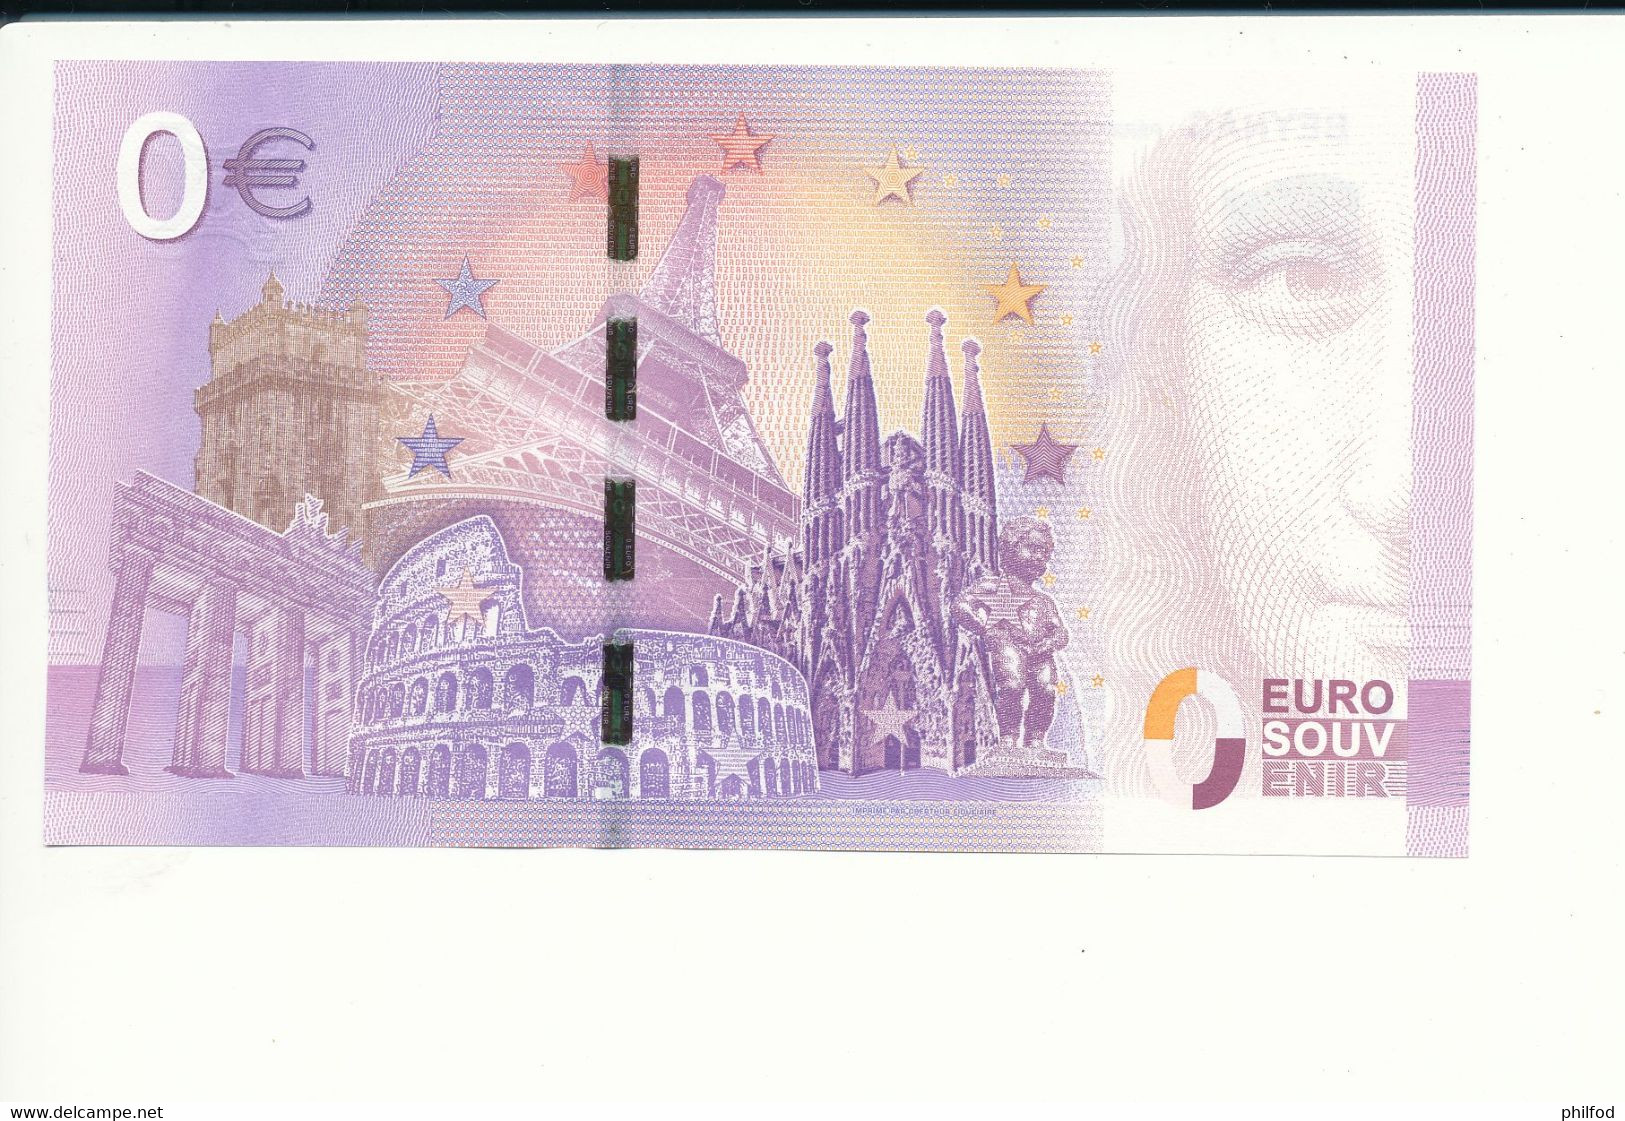 Billet Souvenir - 0 Euro - UELW - 2017- 1 - BEYNAC PERIGORD NOIR - N° 153 - Billet épuisé - Lots & Kiloware - Banknotes